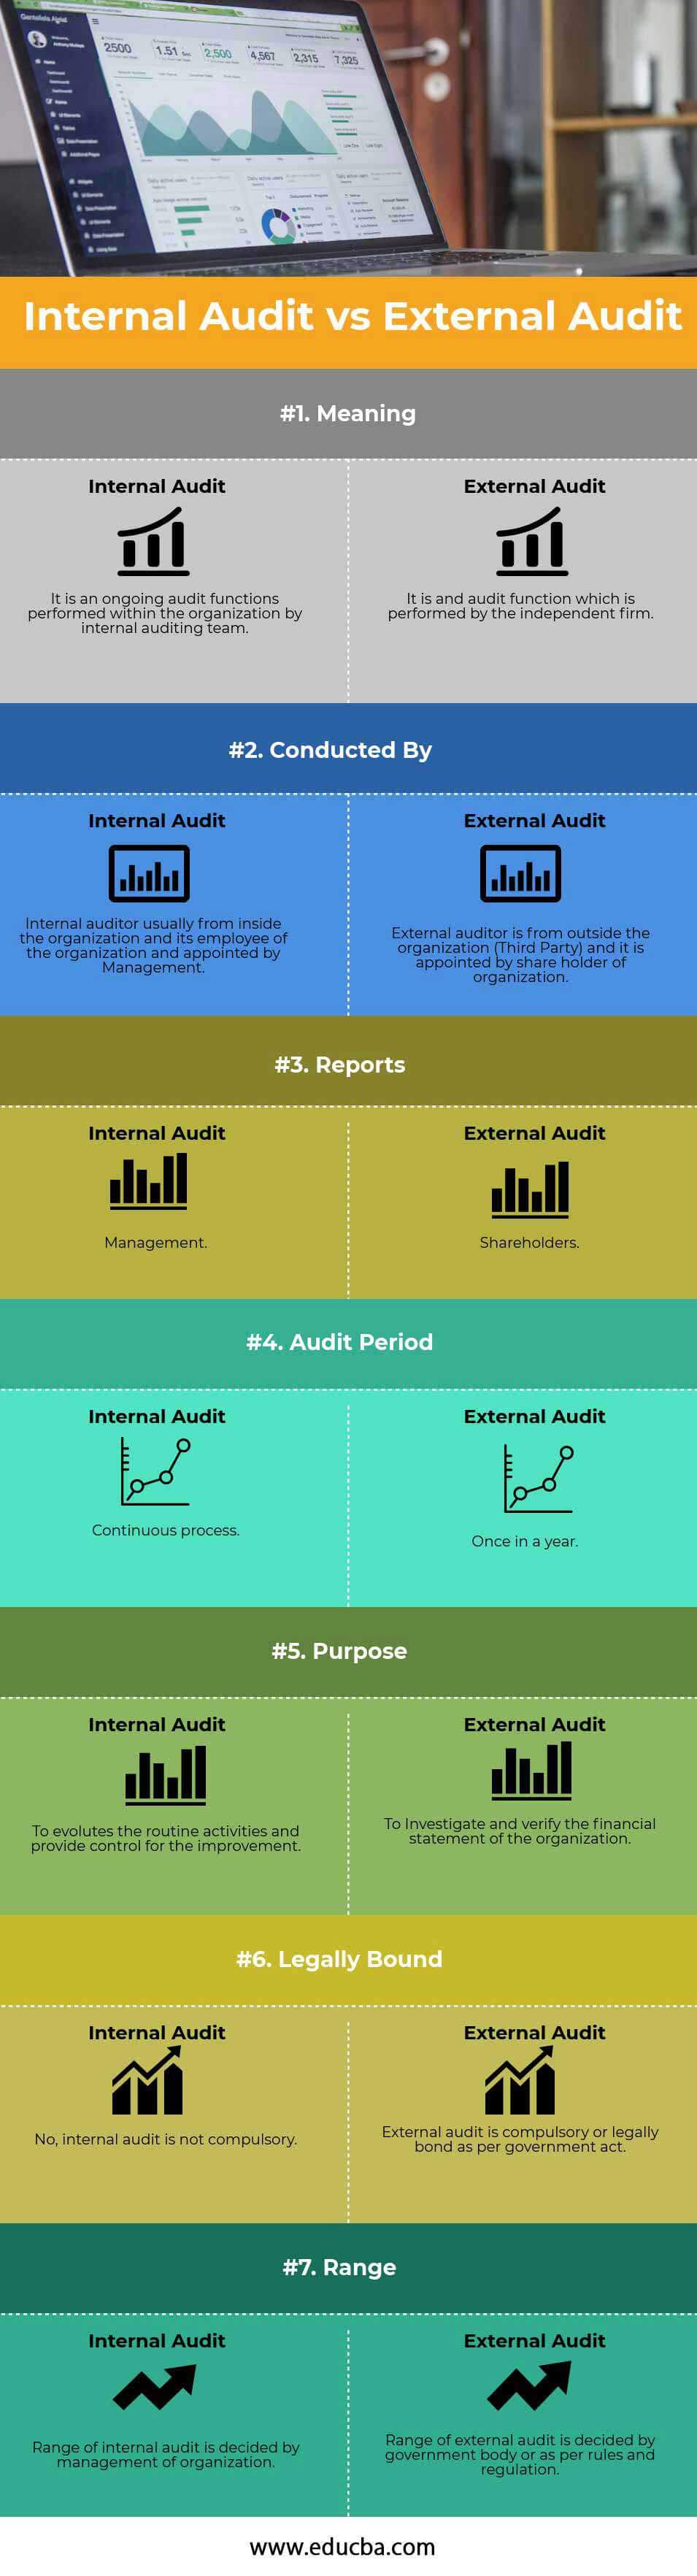 Internal Audit vs External Audit (info)